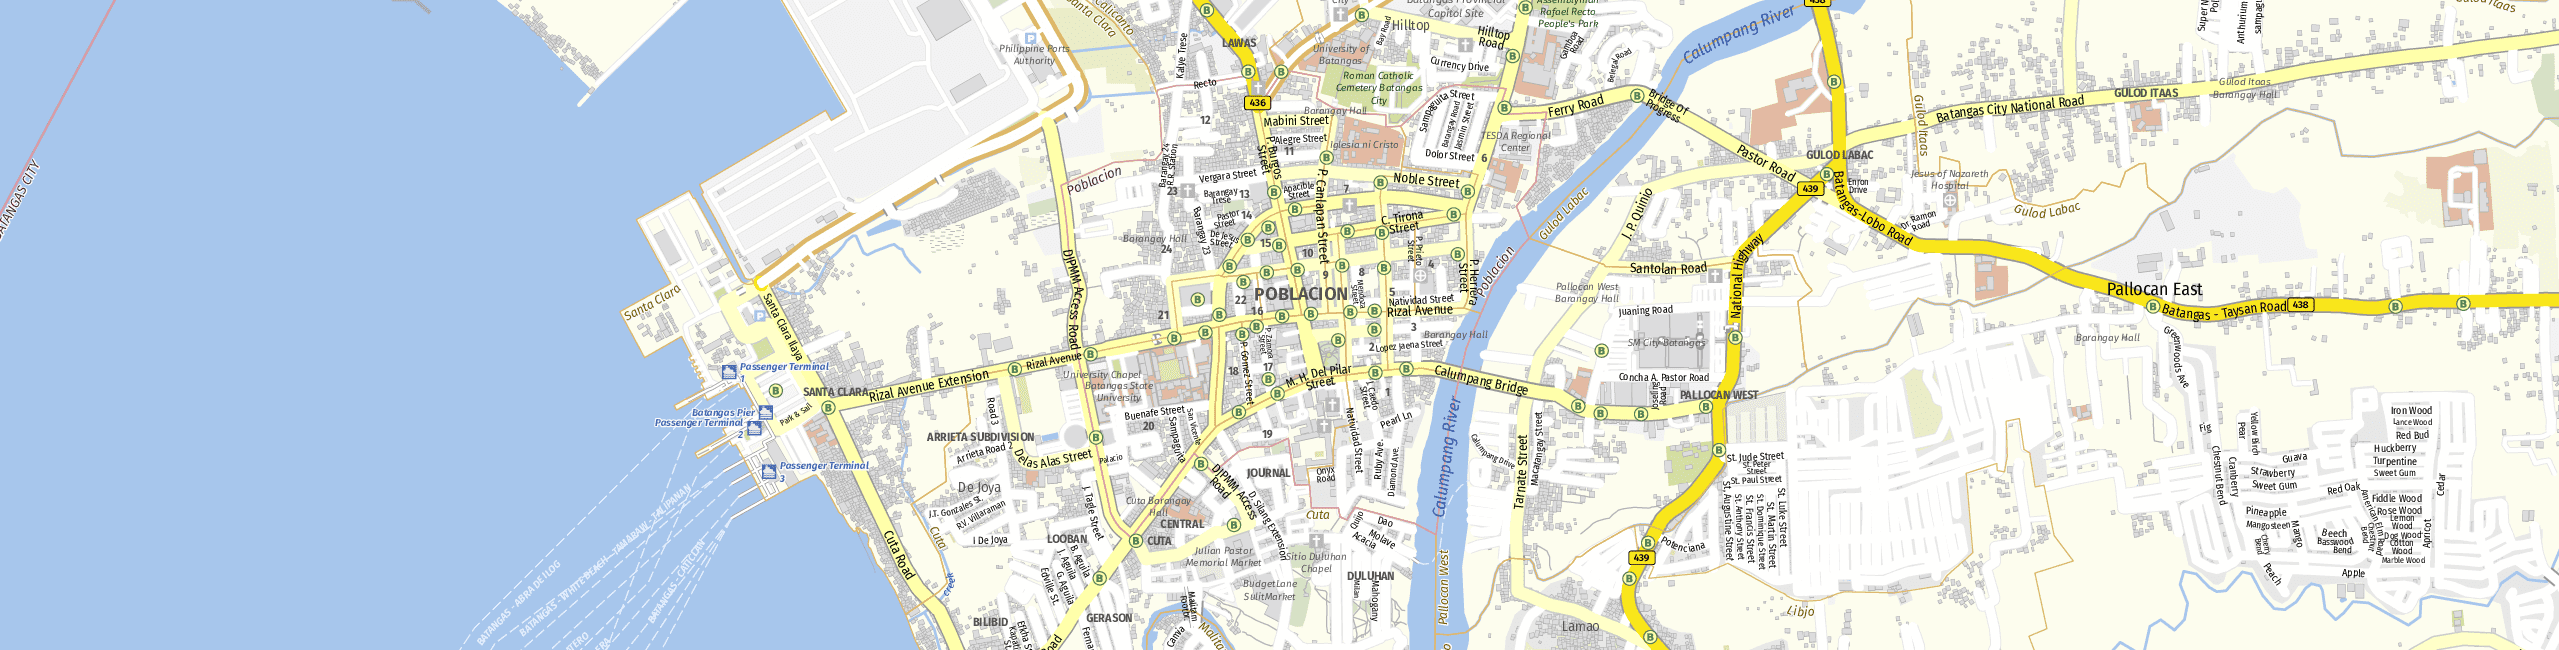 Stadtplan Batangas zum Downloaden.